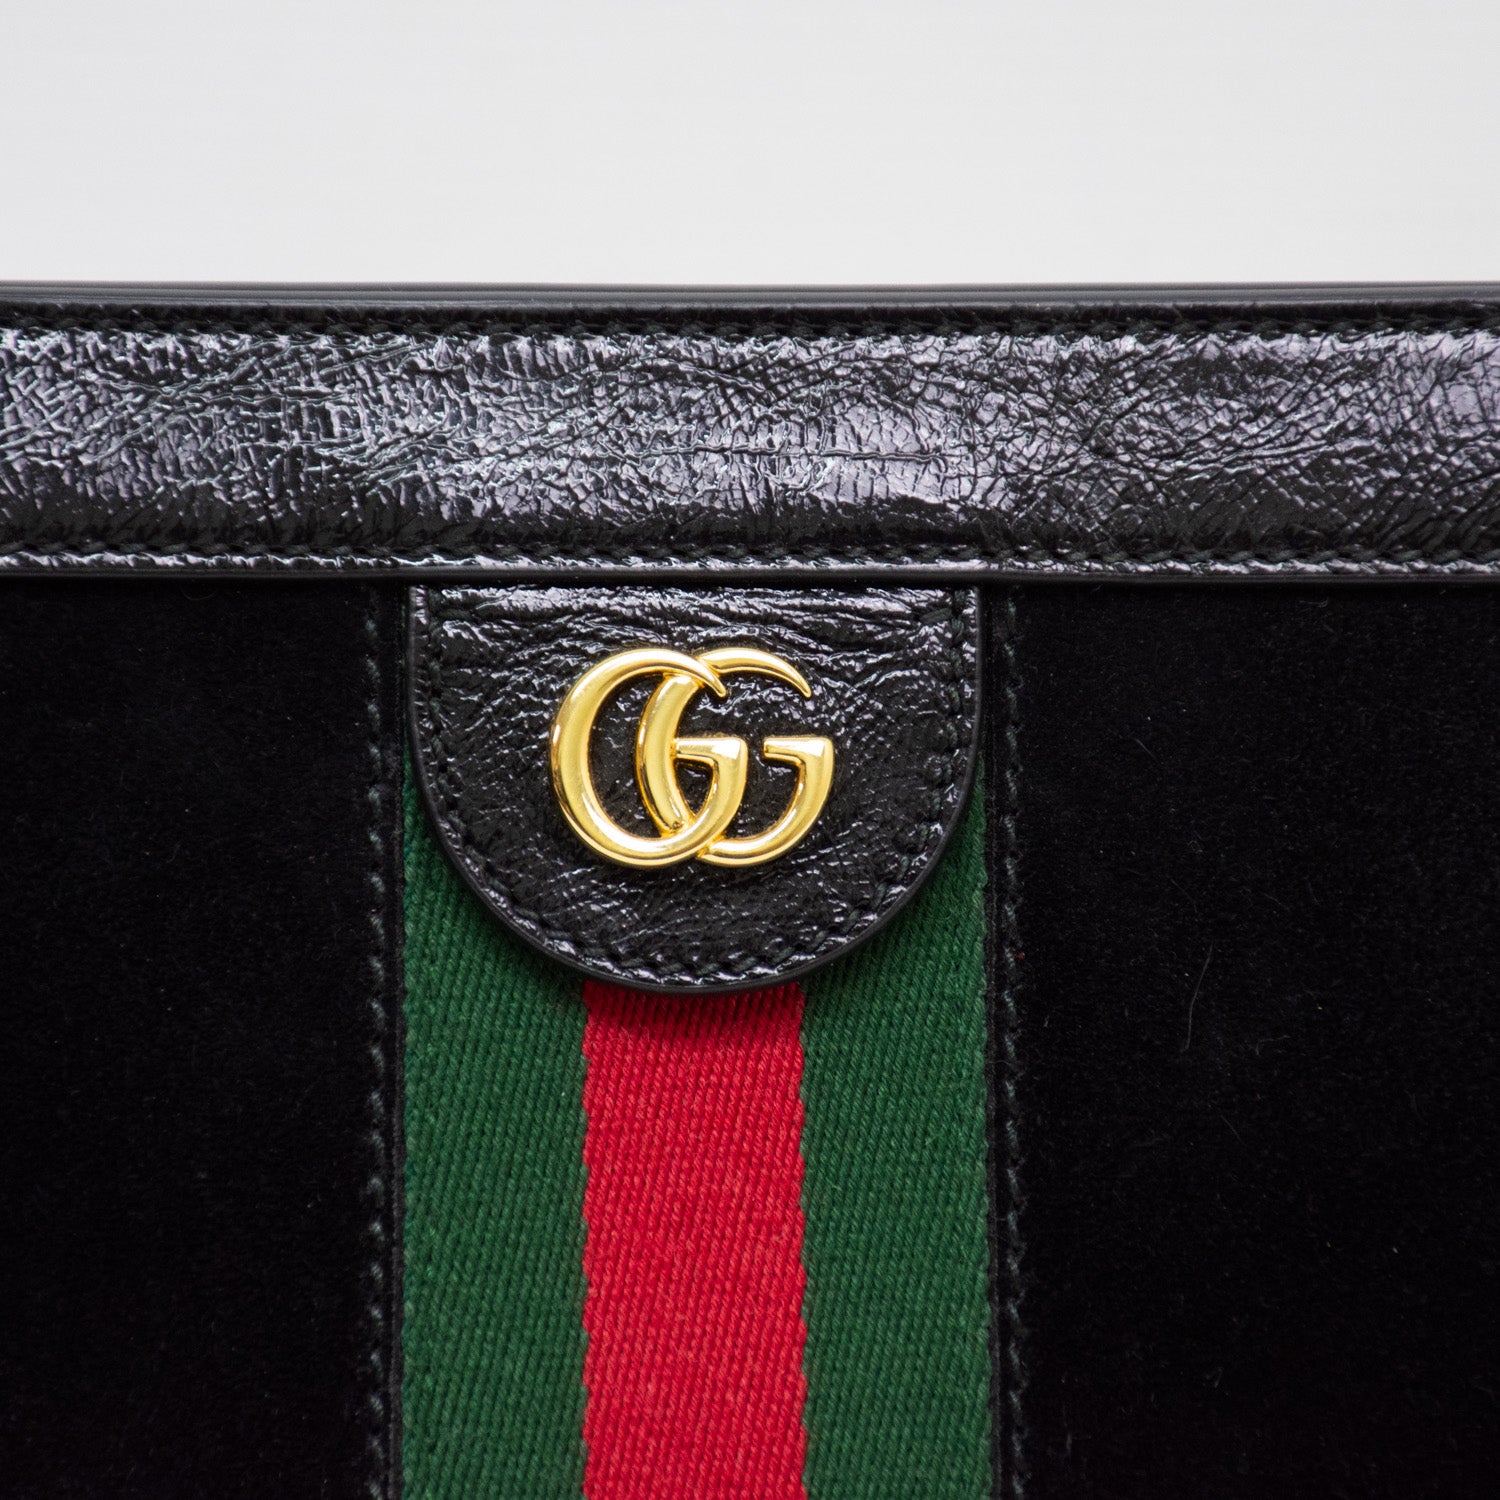 Gucci Black Suede & Leather GG Ophidia Web Shoulder Bag - 503877